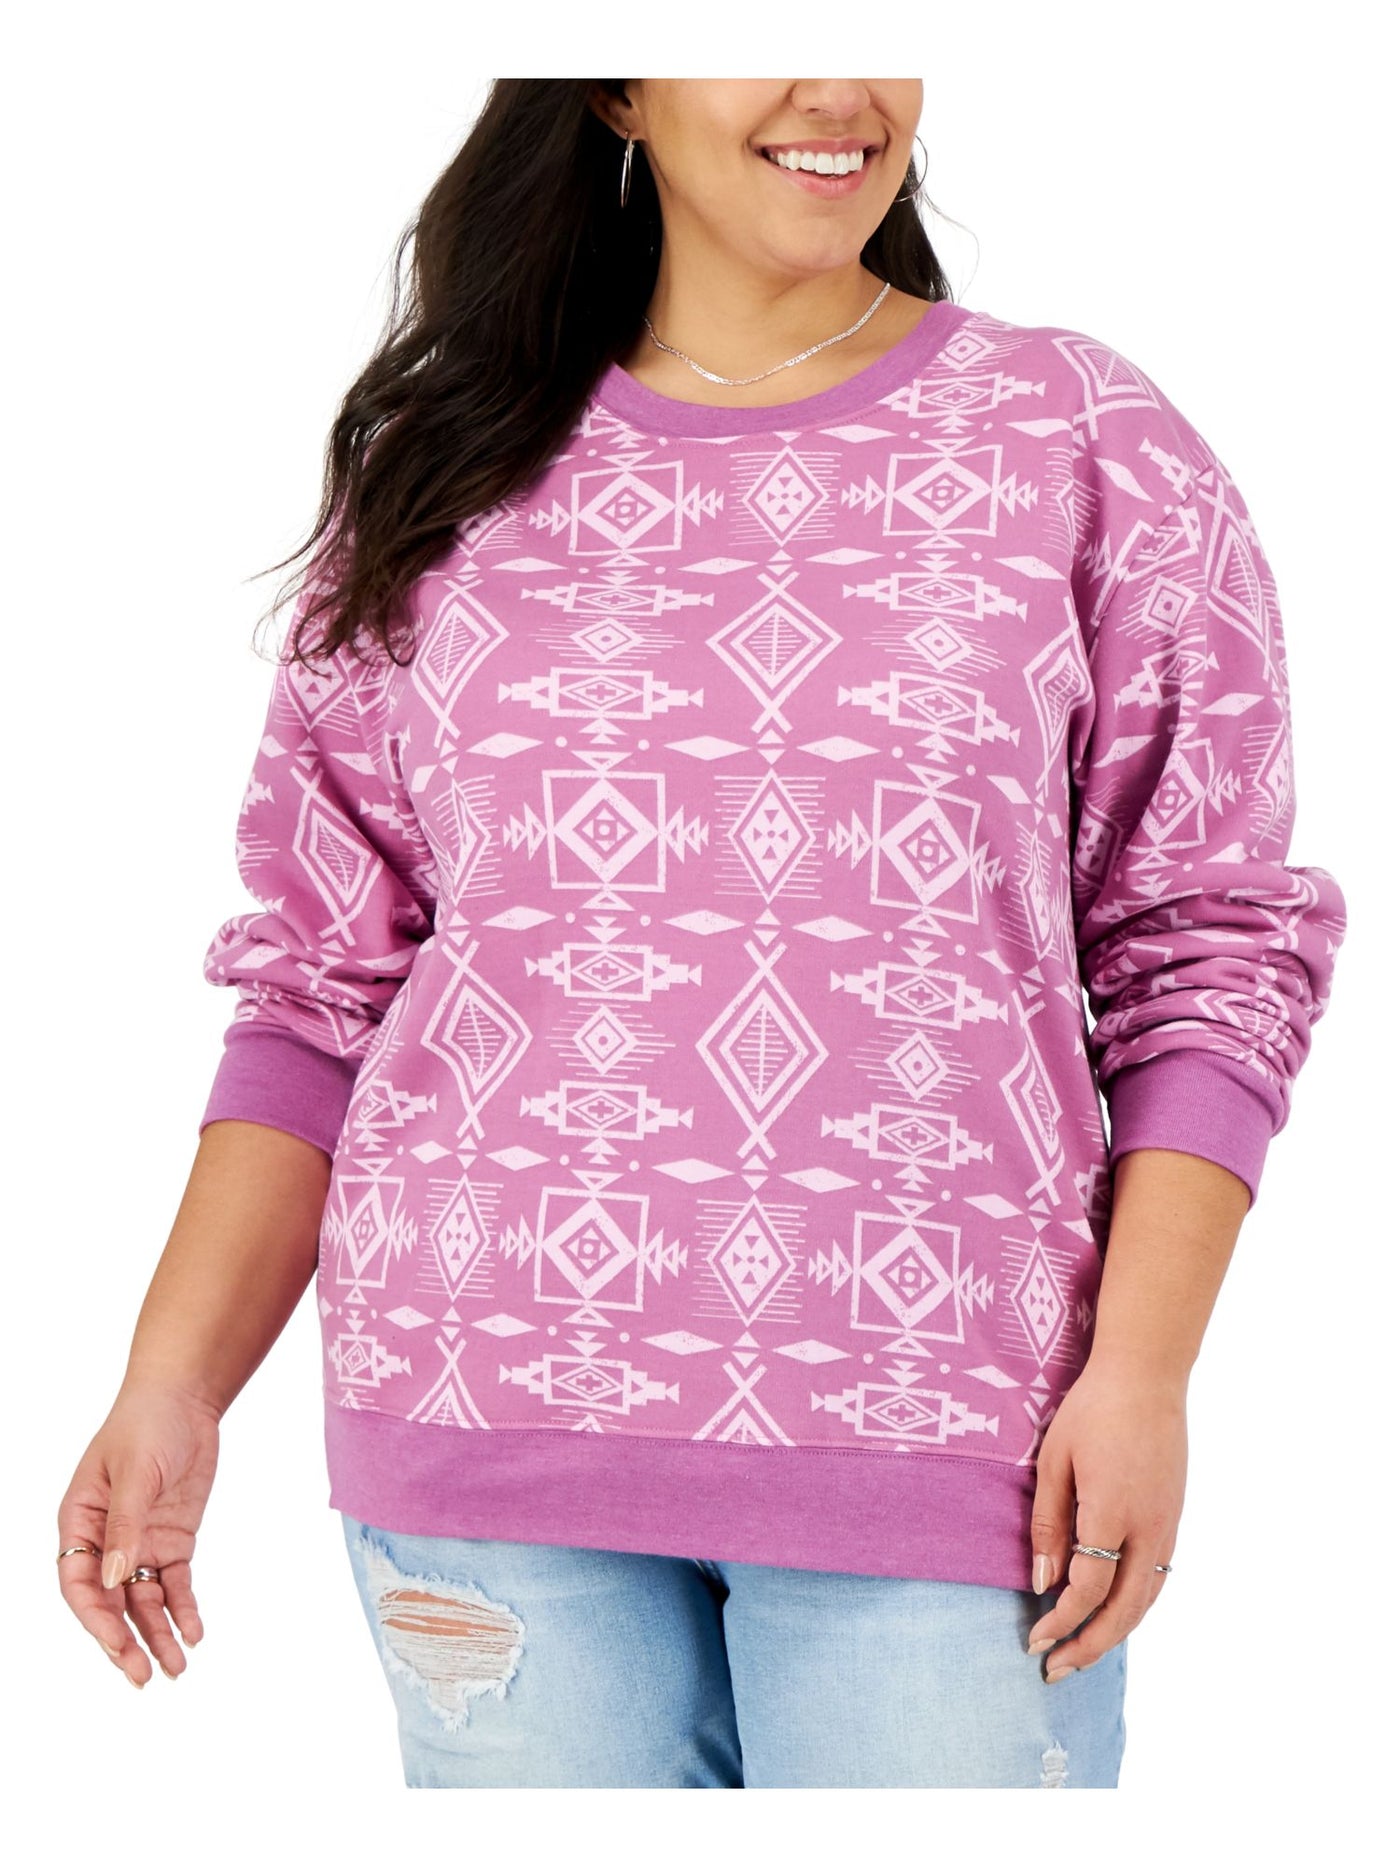 LOVE FIRE Womens Purple Printed Sweatshirt Plus 2X